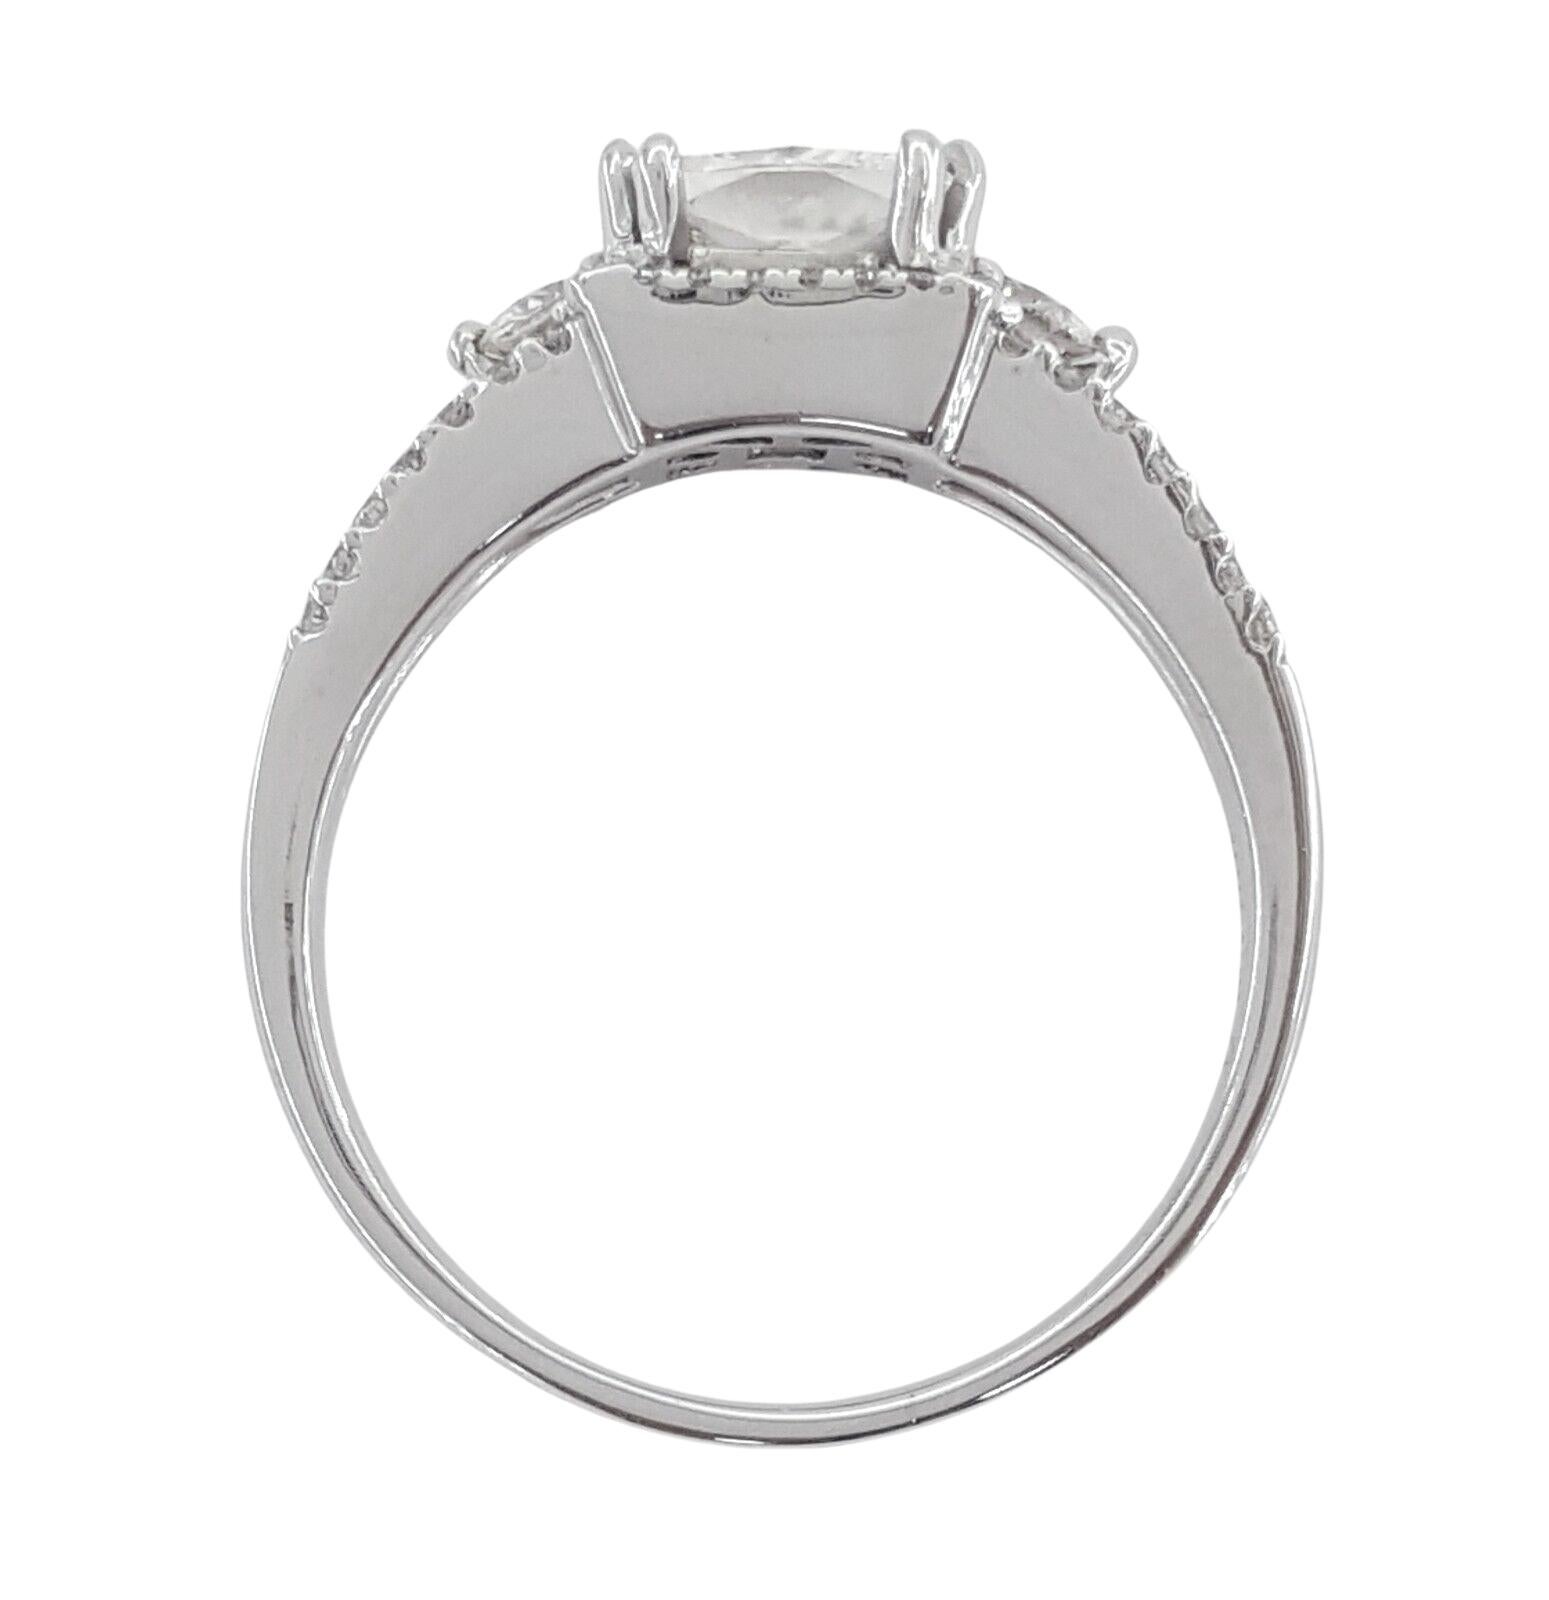  Princess Brilliant Cut Diamond Split-Shank Engagement Ring.

